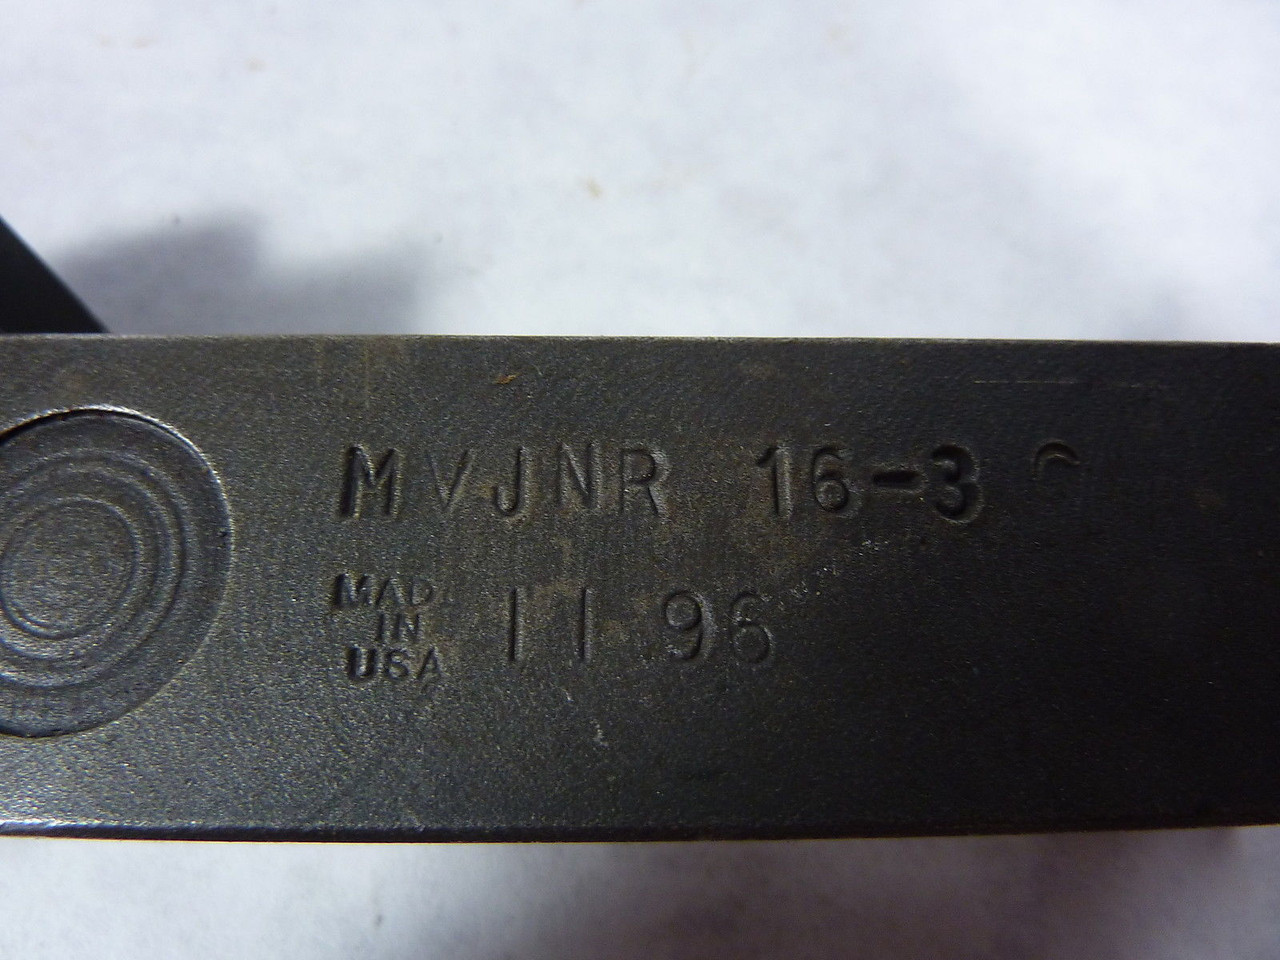 Generic MVJNR 16-3 Carbide Boring Bar USED